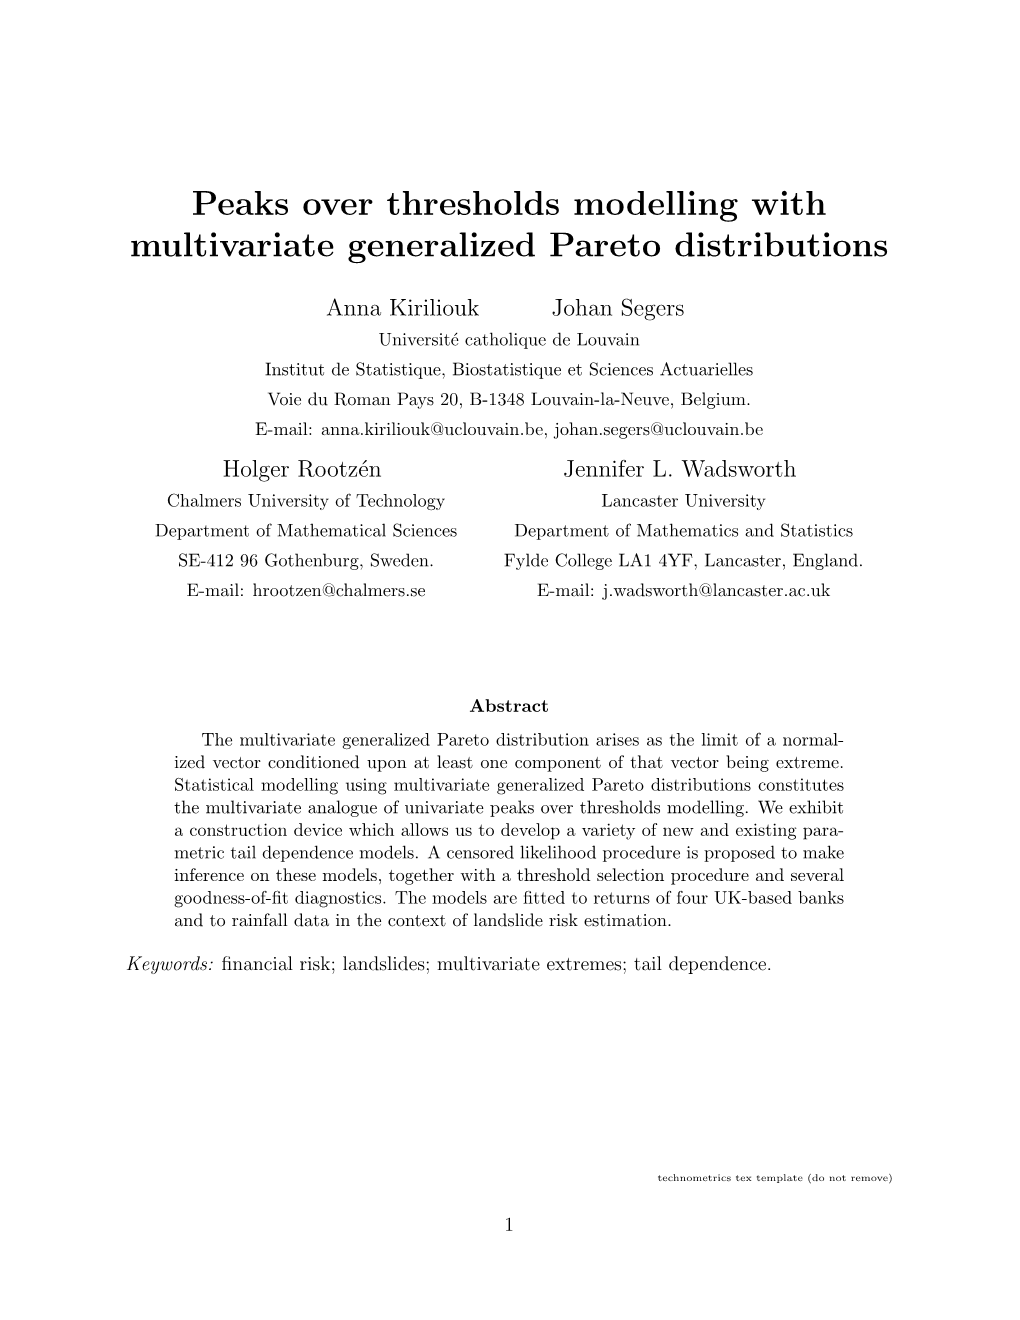 Peaks Over Thresholds Modelling with Multivariate Generalized Pareto Distributions